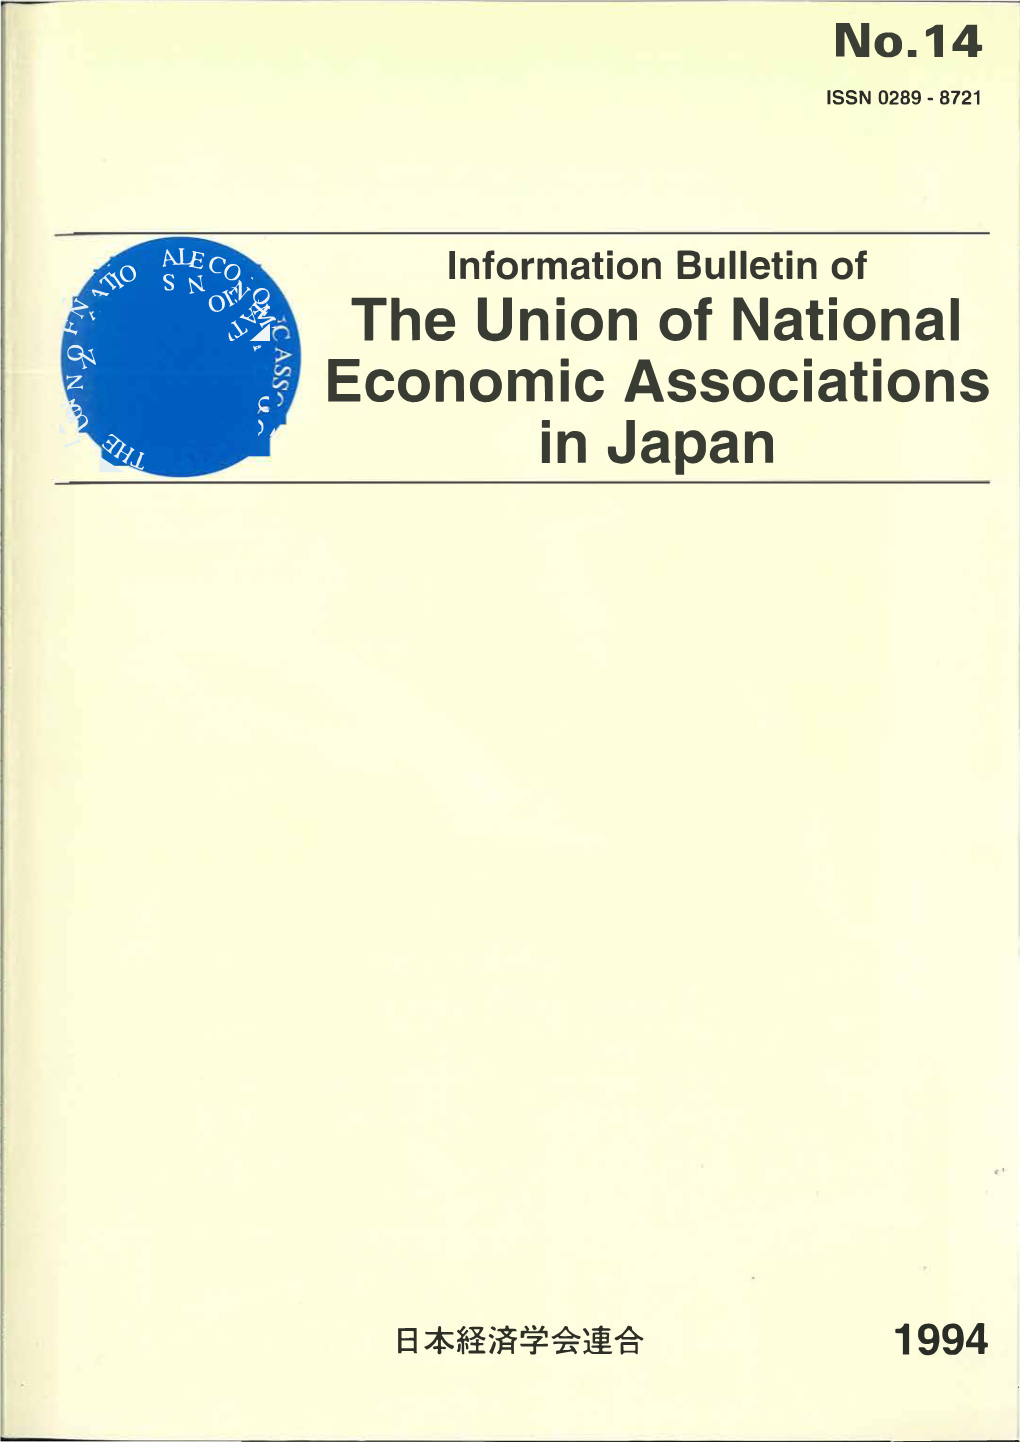 The Union of National Economic Associations in Japan, C/O School of Commerce, Waseda University, Nishiwaseda 1-6-1 , Shinjuku-Ku, Tokyo 169-50, Japan